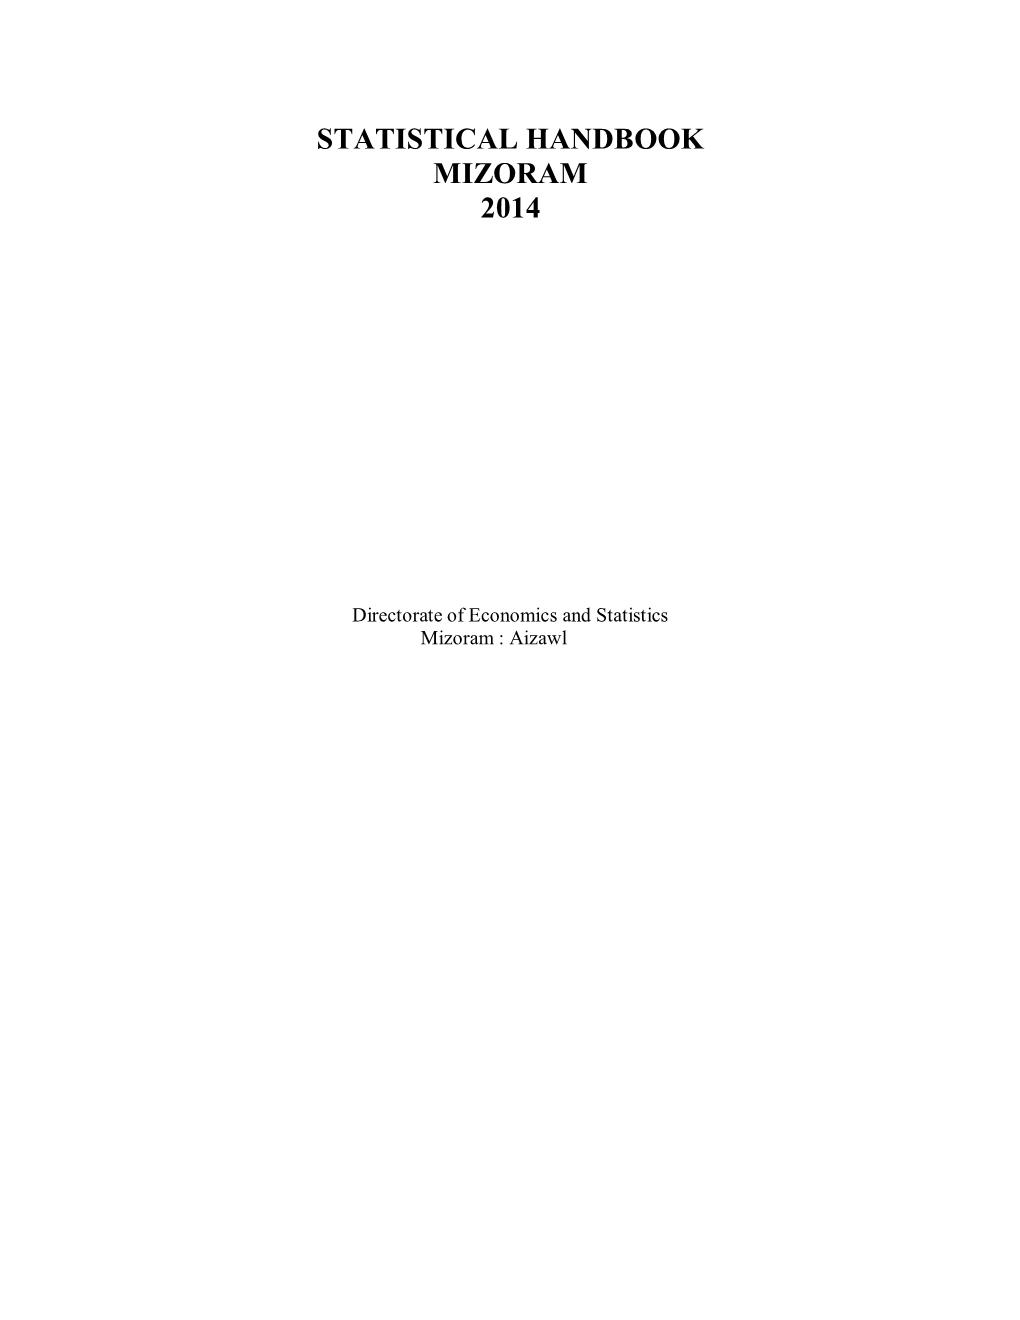 Statistical Handbook Mizoram 2014